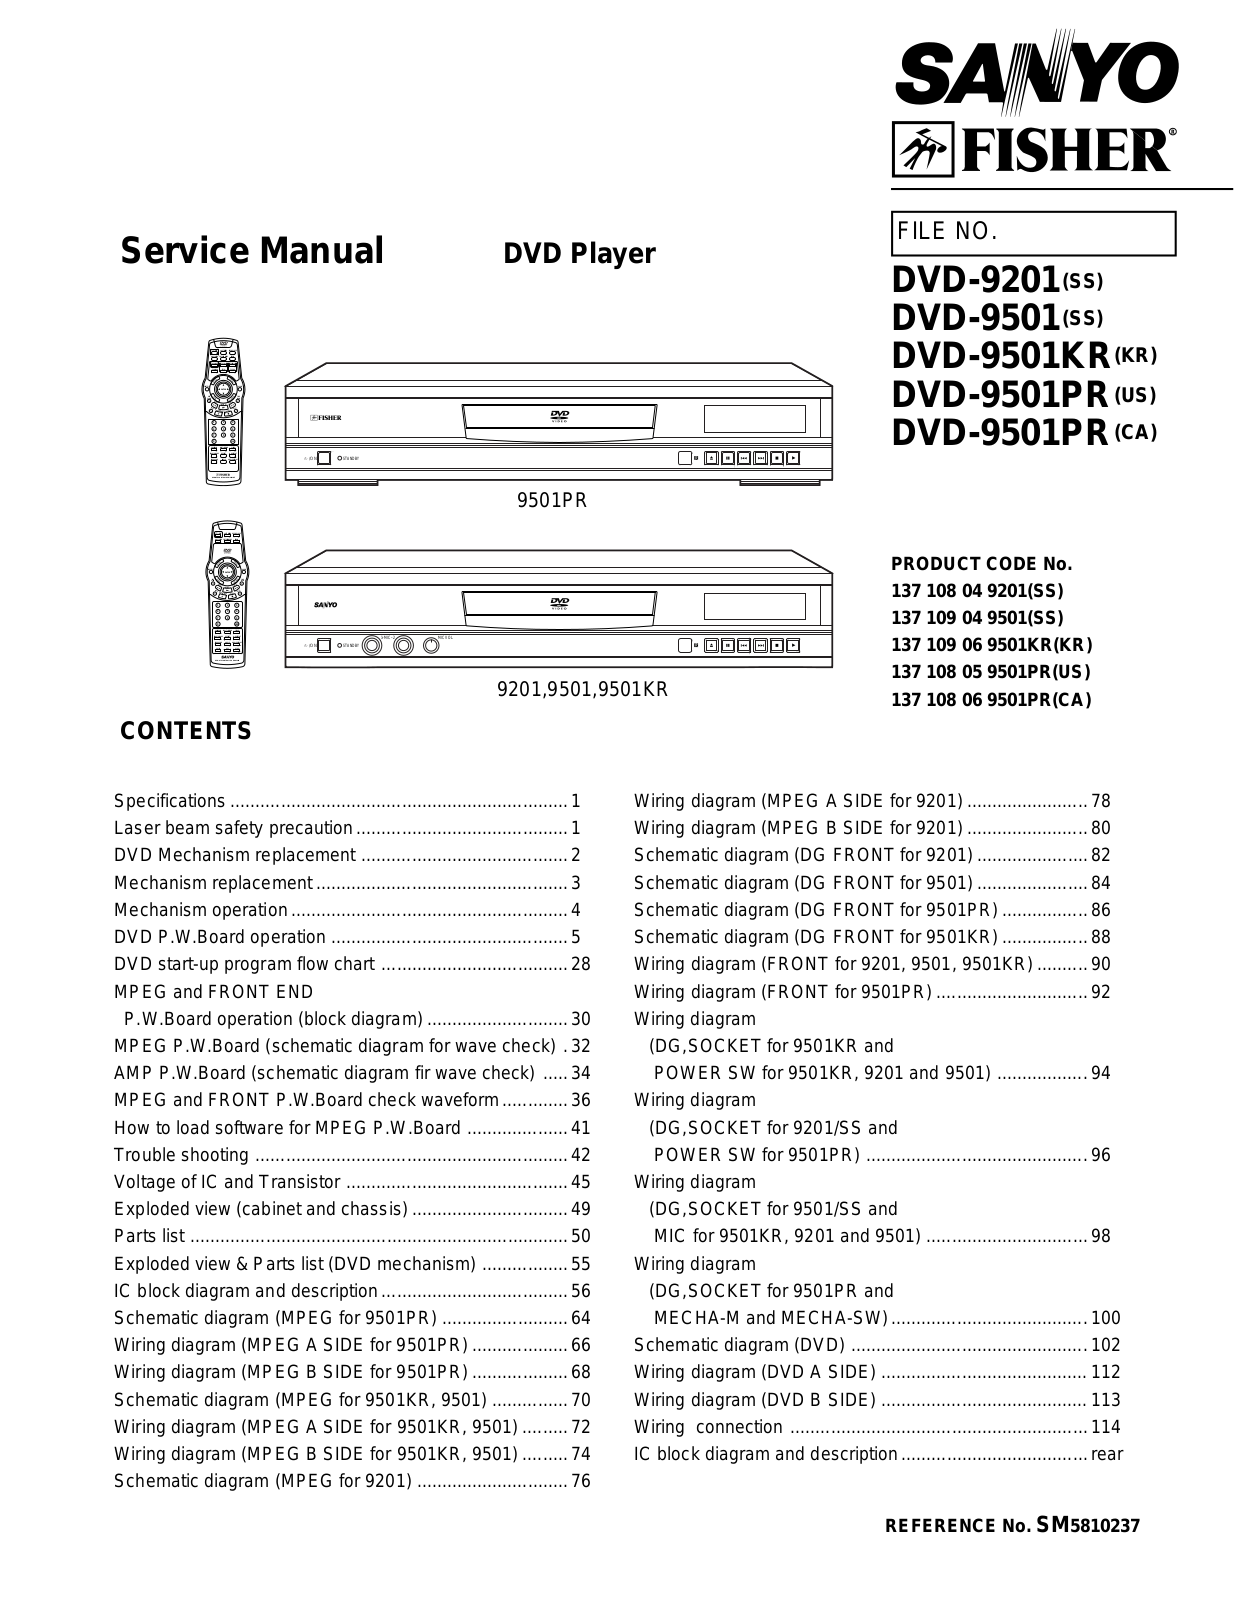 Sanyo DVD-9201, DVD-9501KR, DVD-9501, DVD-9501PR User Manual